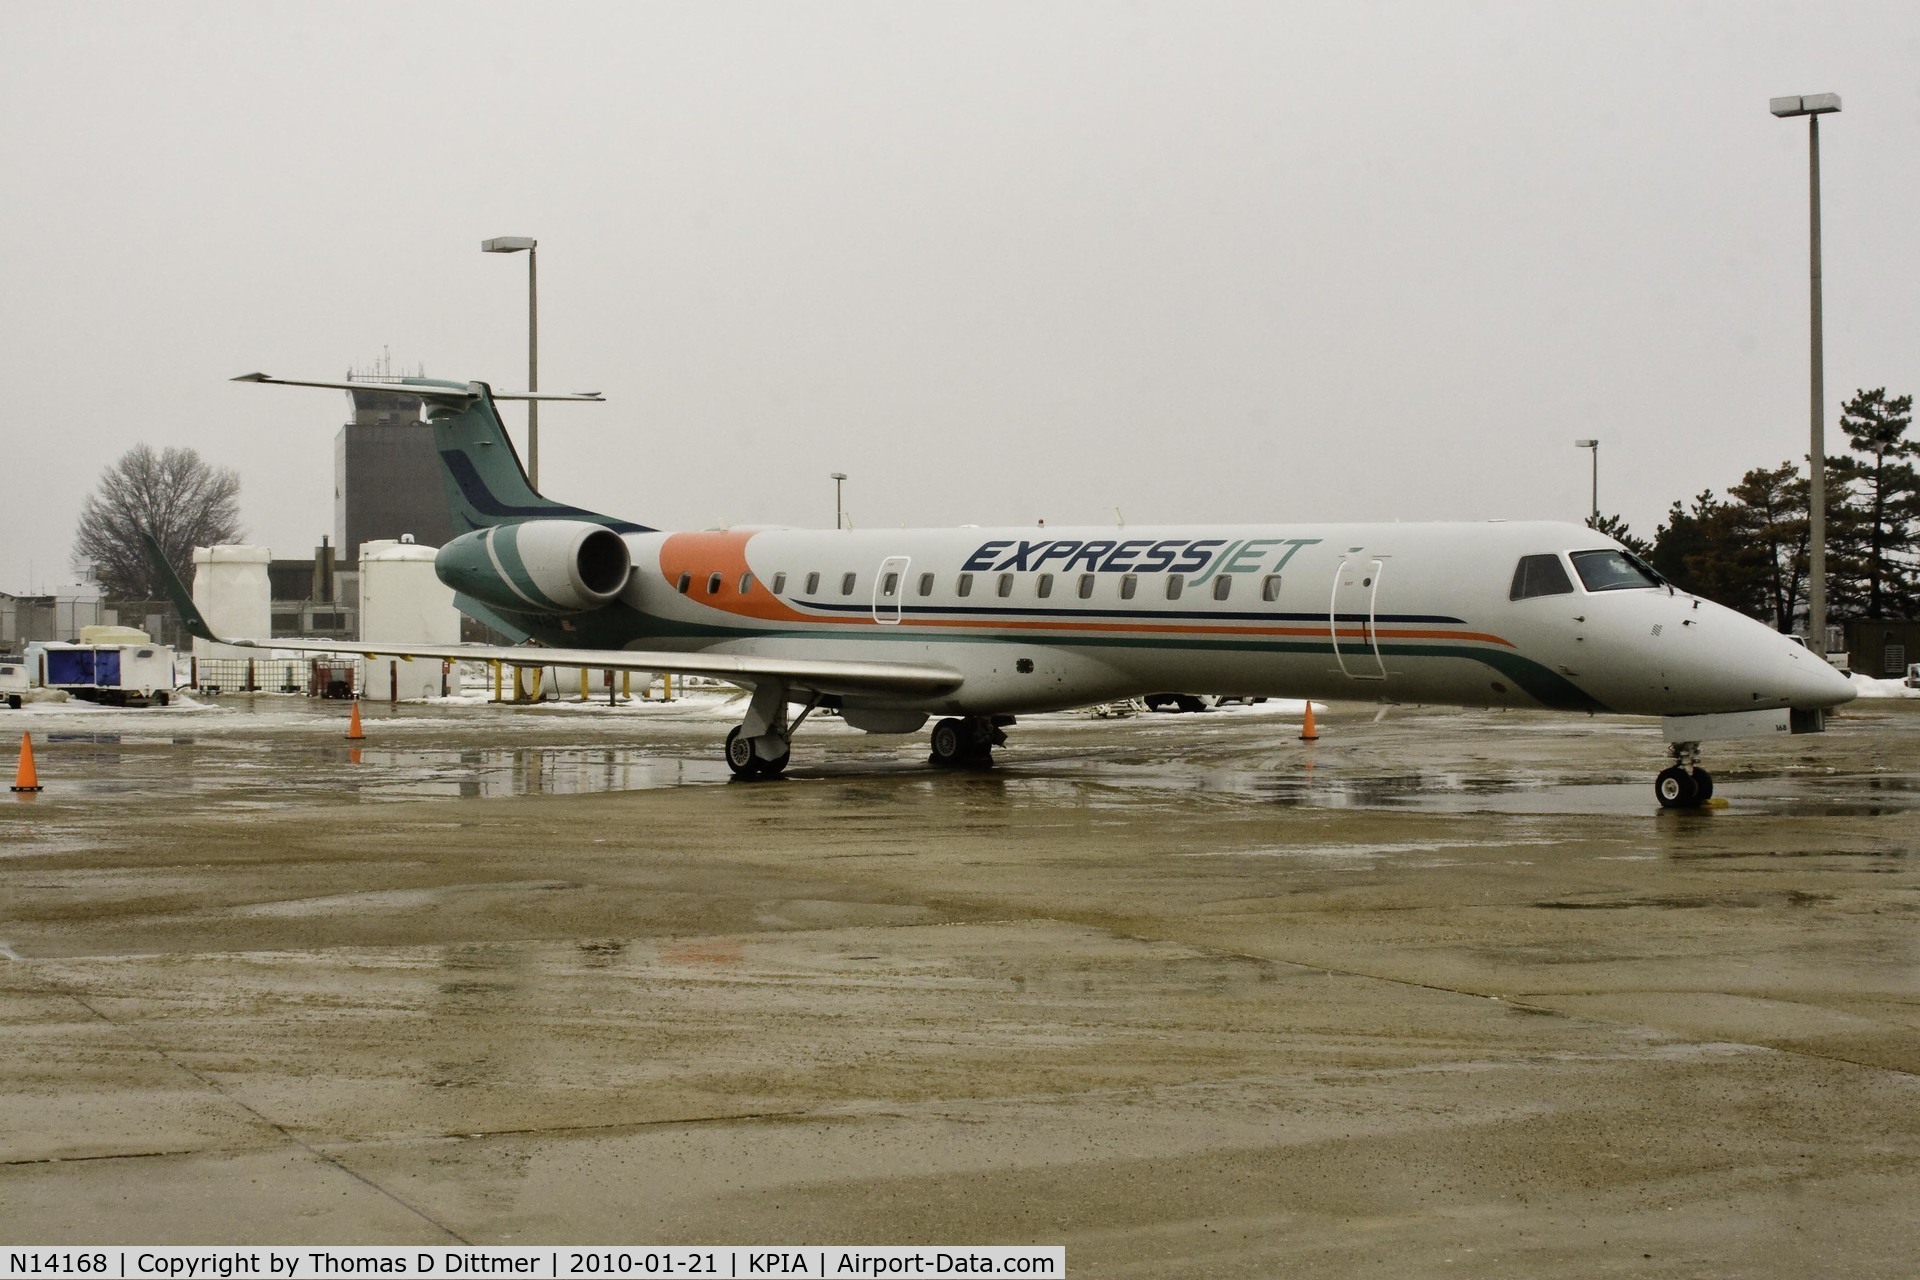 N14168, 2004 Embraer ERJ-145XR (EMB-145XR) C/N 14500840, Express Jet (N14168) right front view